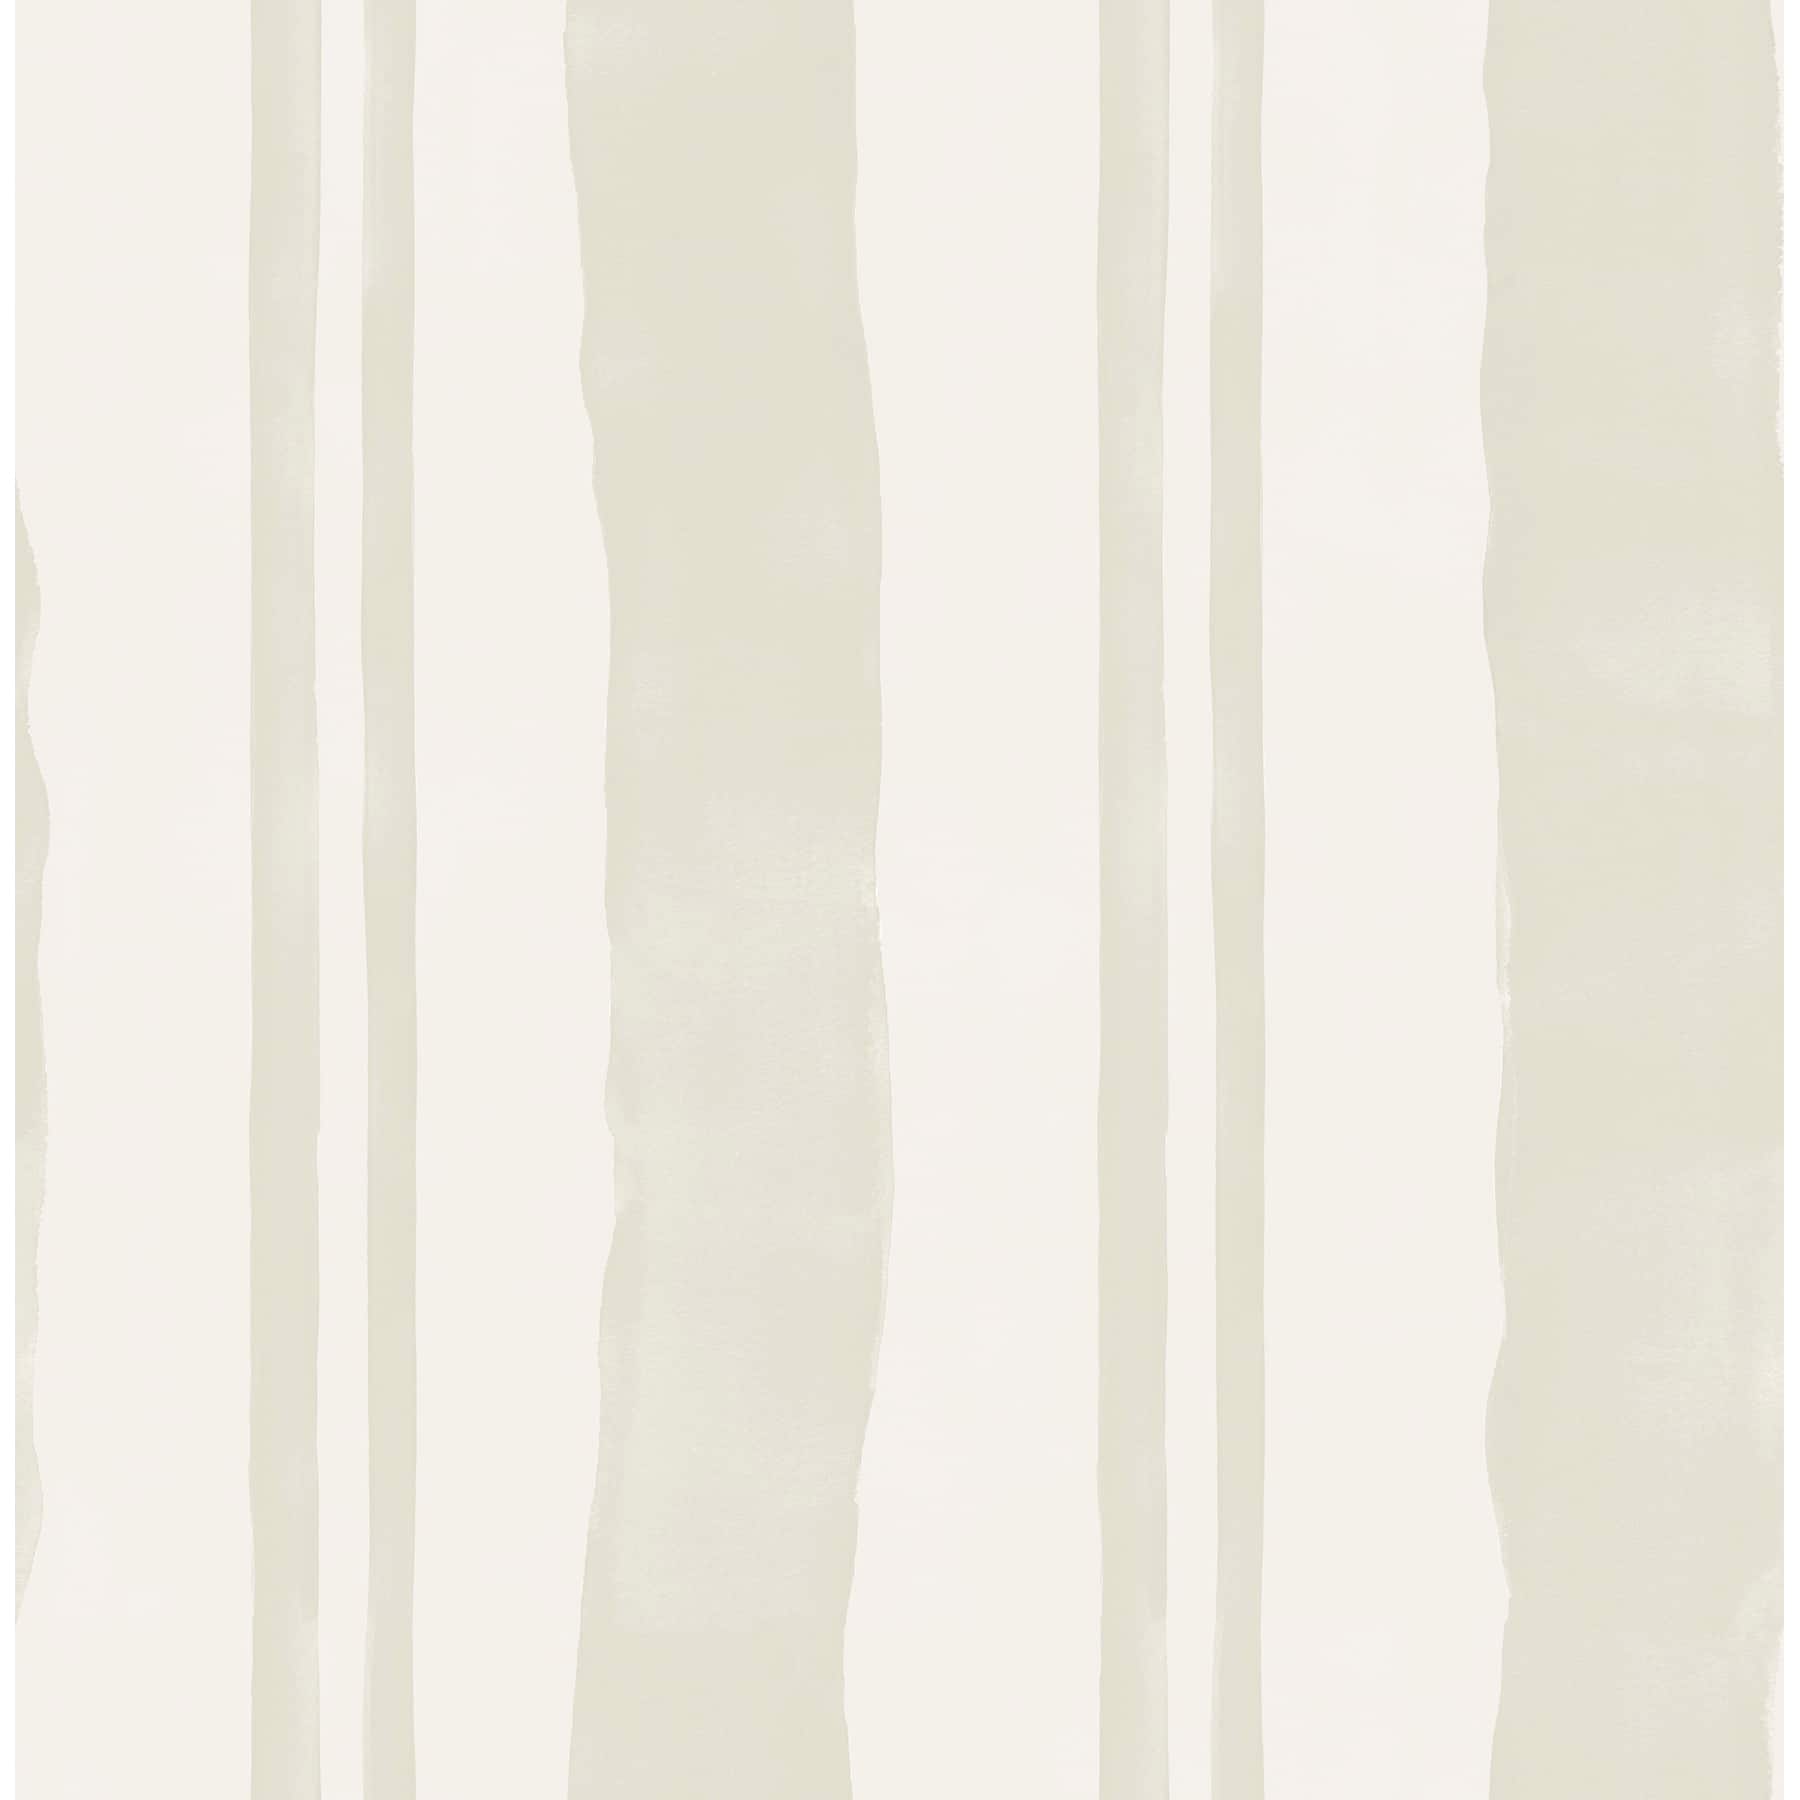 RoomMates Mr. Kate Winston Watercolor Stripe Peel & Stick Wallpaper